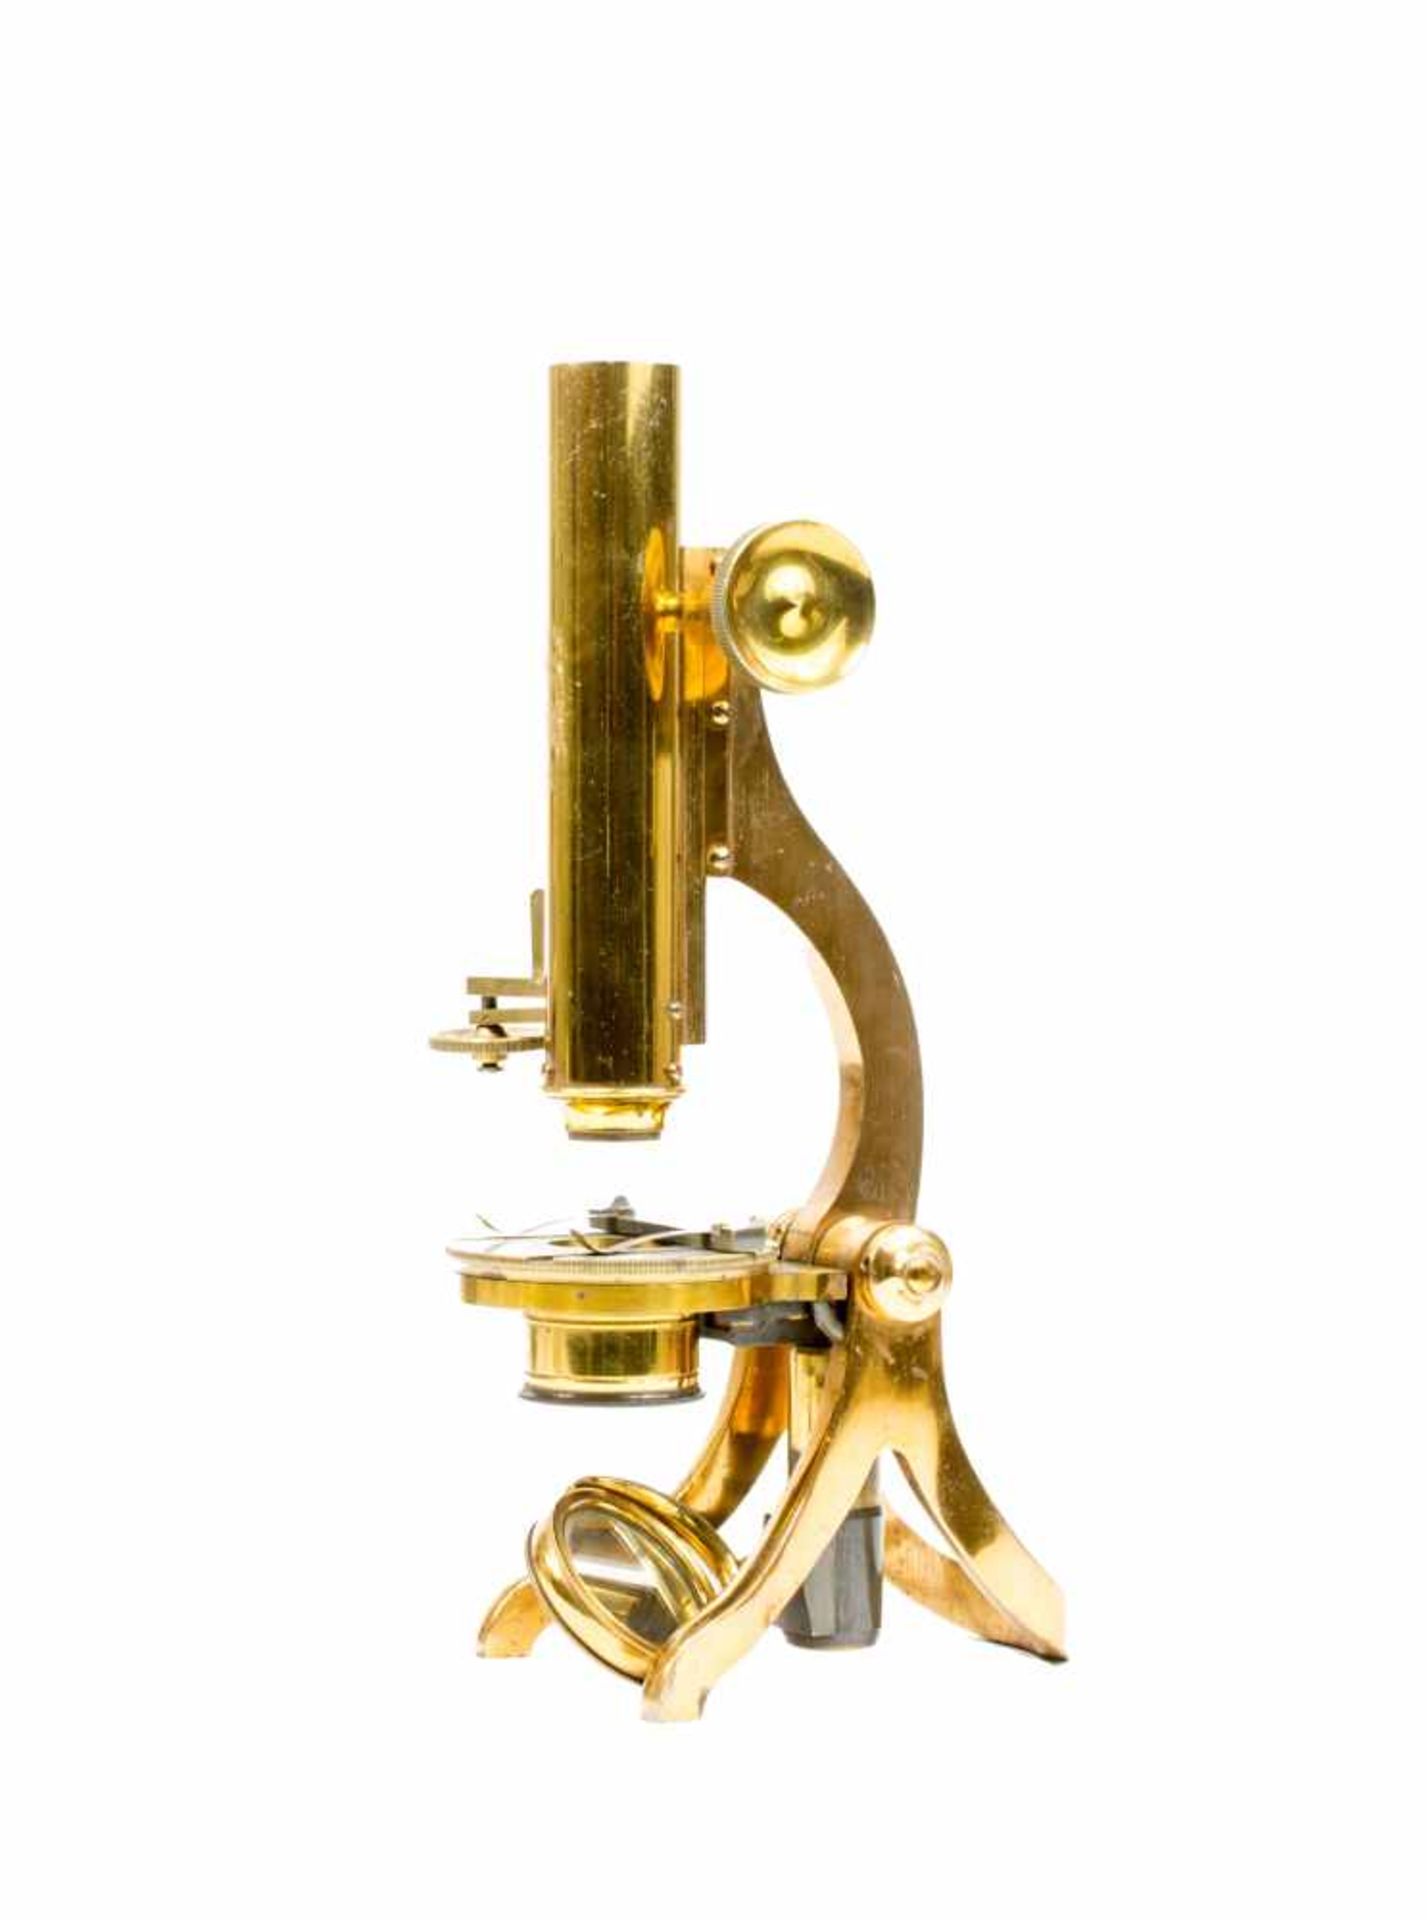 MikroskopEngland, 19. Jh., Messing, in Holzschatulle, Höhe 31 cm, gebraucht, mit geringfügigen